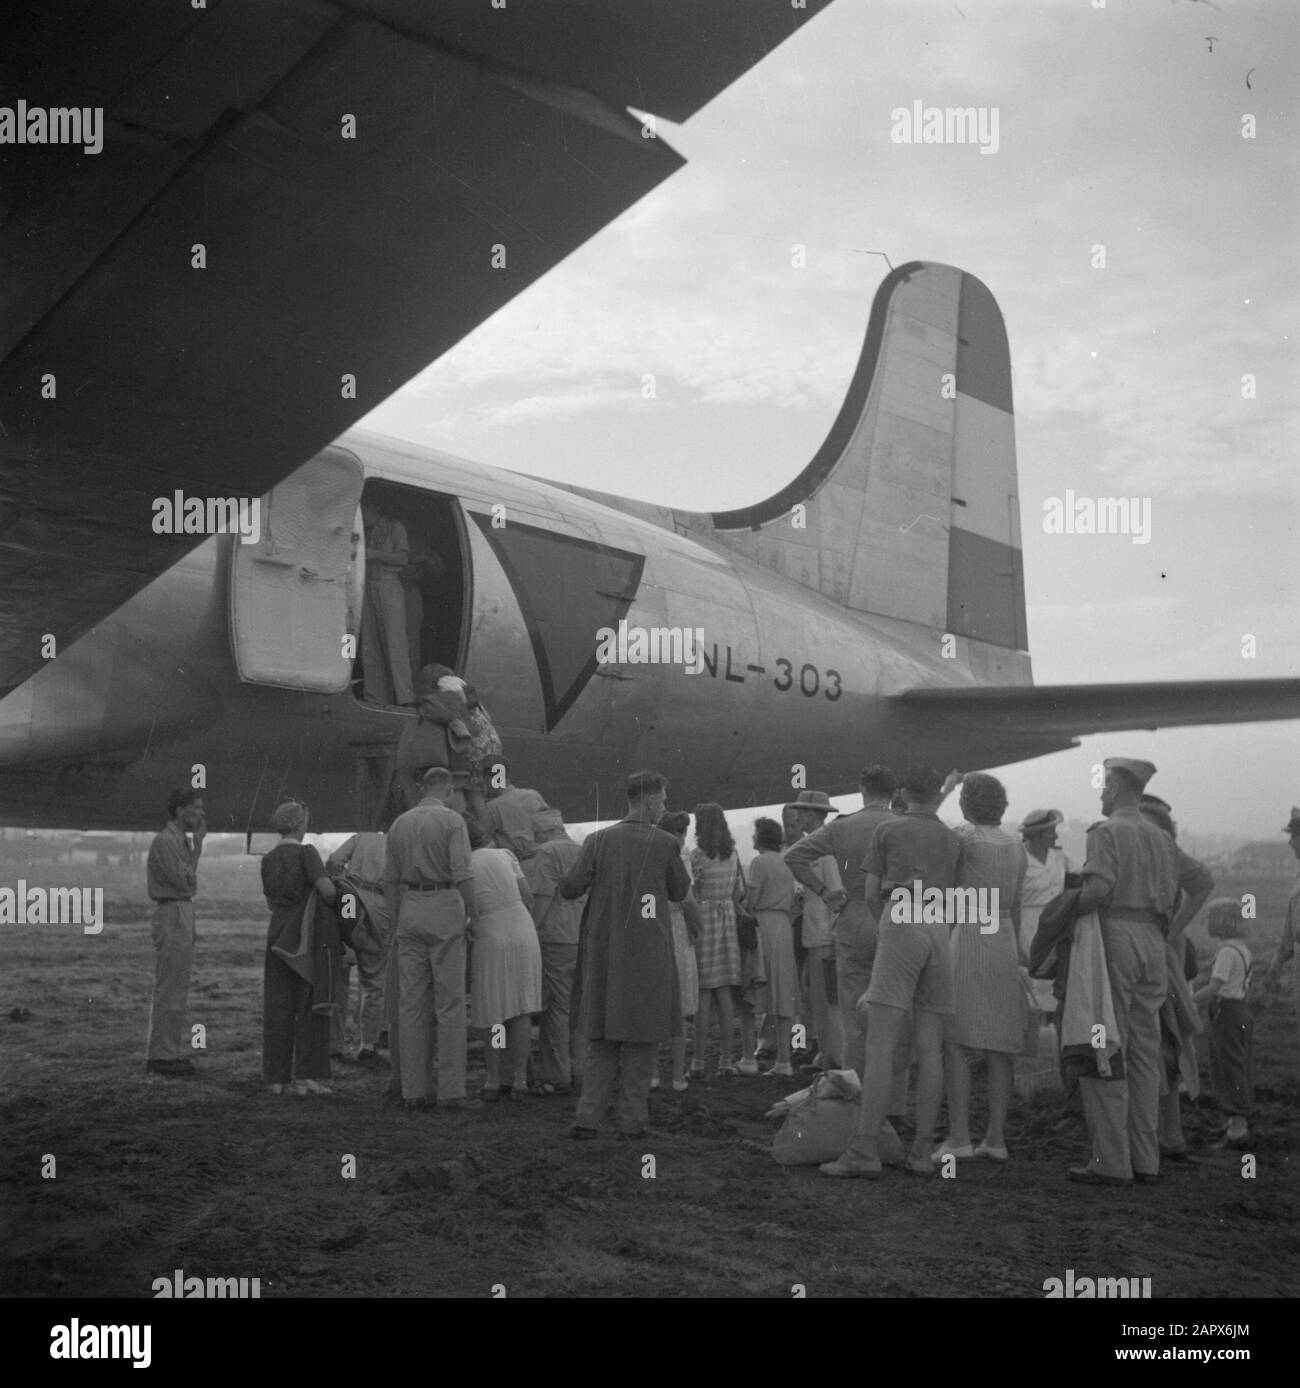 https://c8.alamy.com/comp/2APX6JM/war-volunteers-in-malacca-and-indonesia-repatriation-at-kemajoran-airport-of-batavia-annotation-douglas-c-54-skymaster-with-license-plate-nl-303-date-november-1945-location-bandung-batavia-indonesia-jakarta-kemajoran-dutch-east-indies-keywords-passengers-repatriation-airports-2APX6JM.jpg